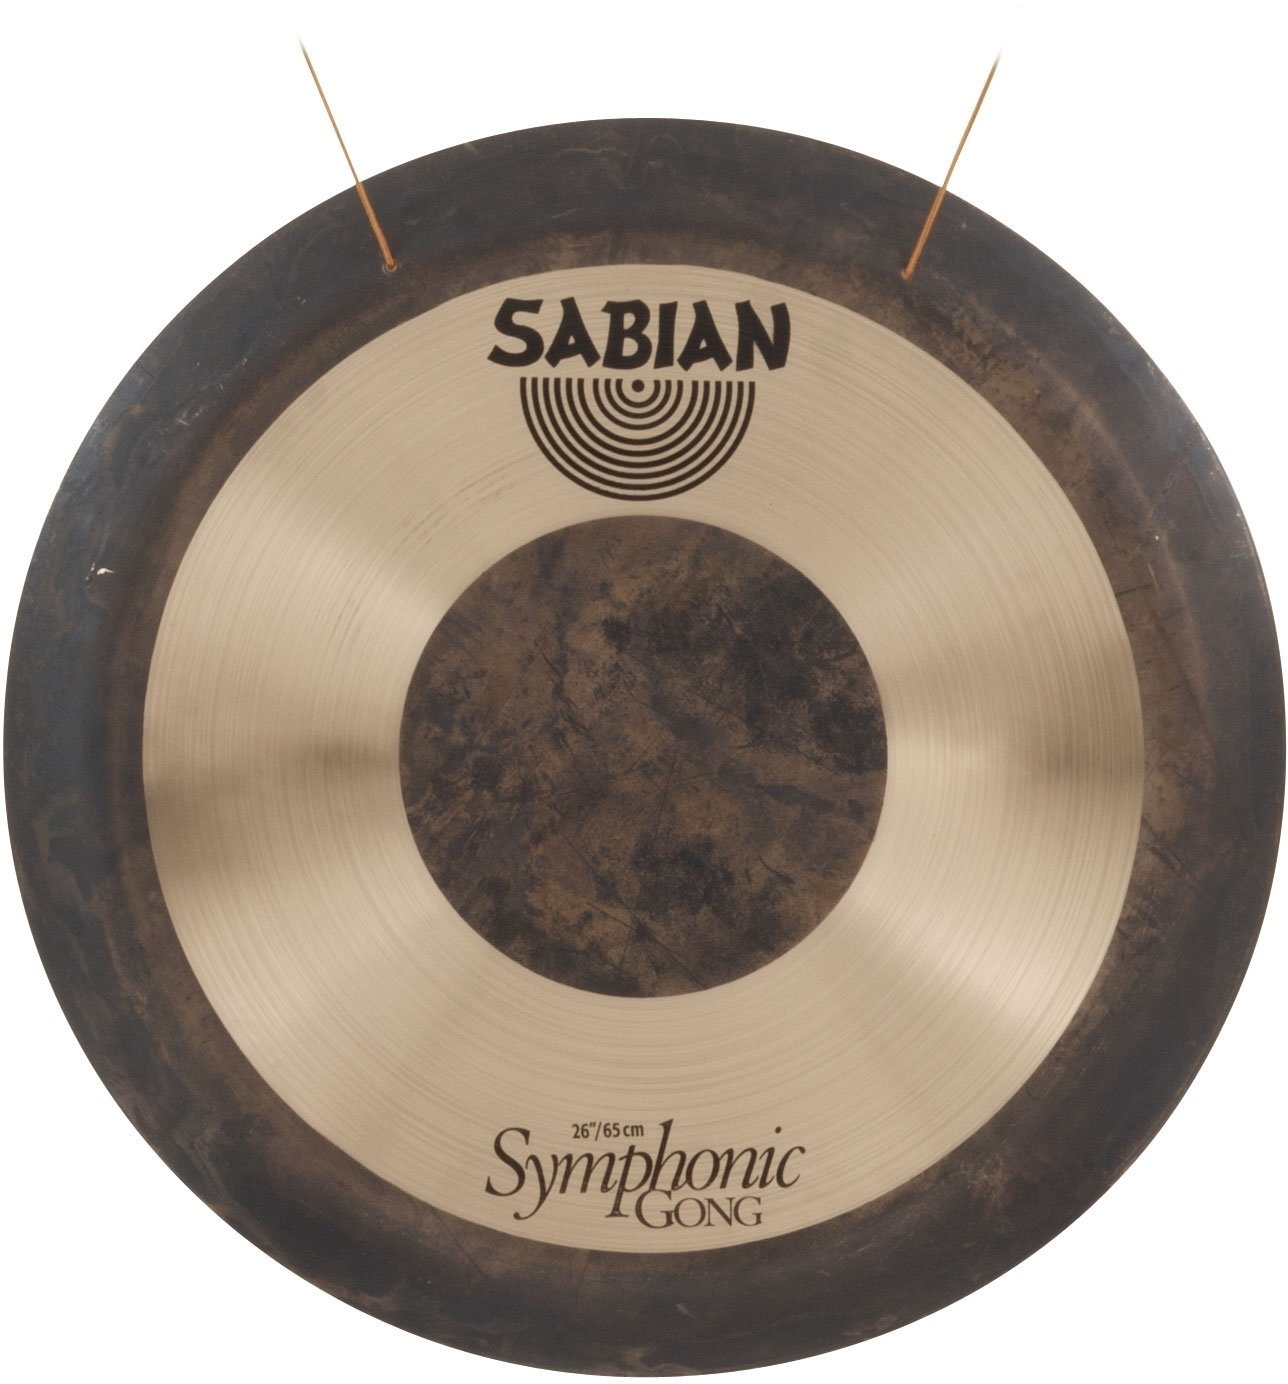 Sabian 52602 Symphonic Medium-Heavy Gong 26" Sabian